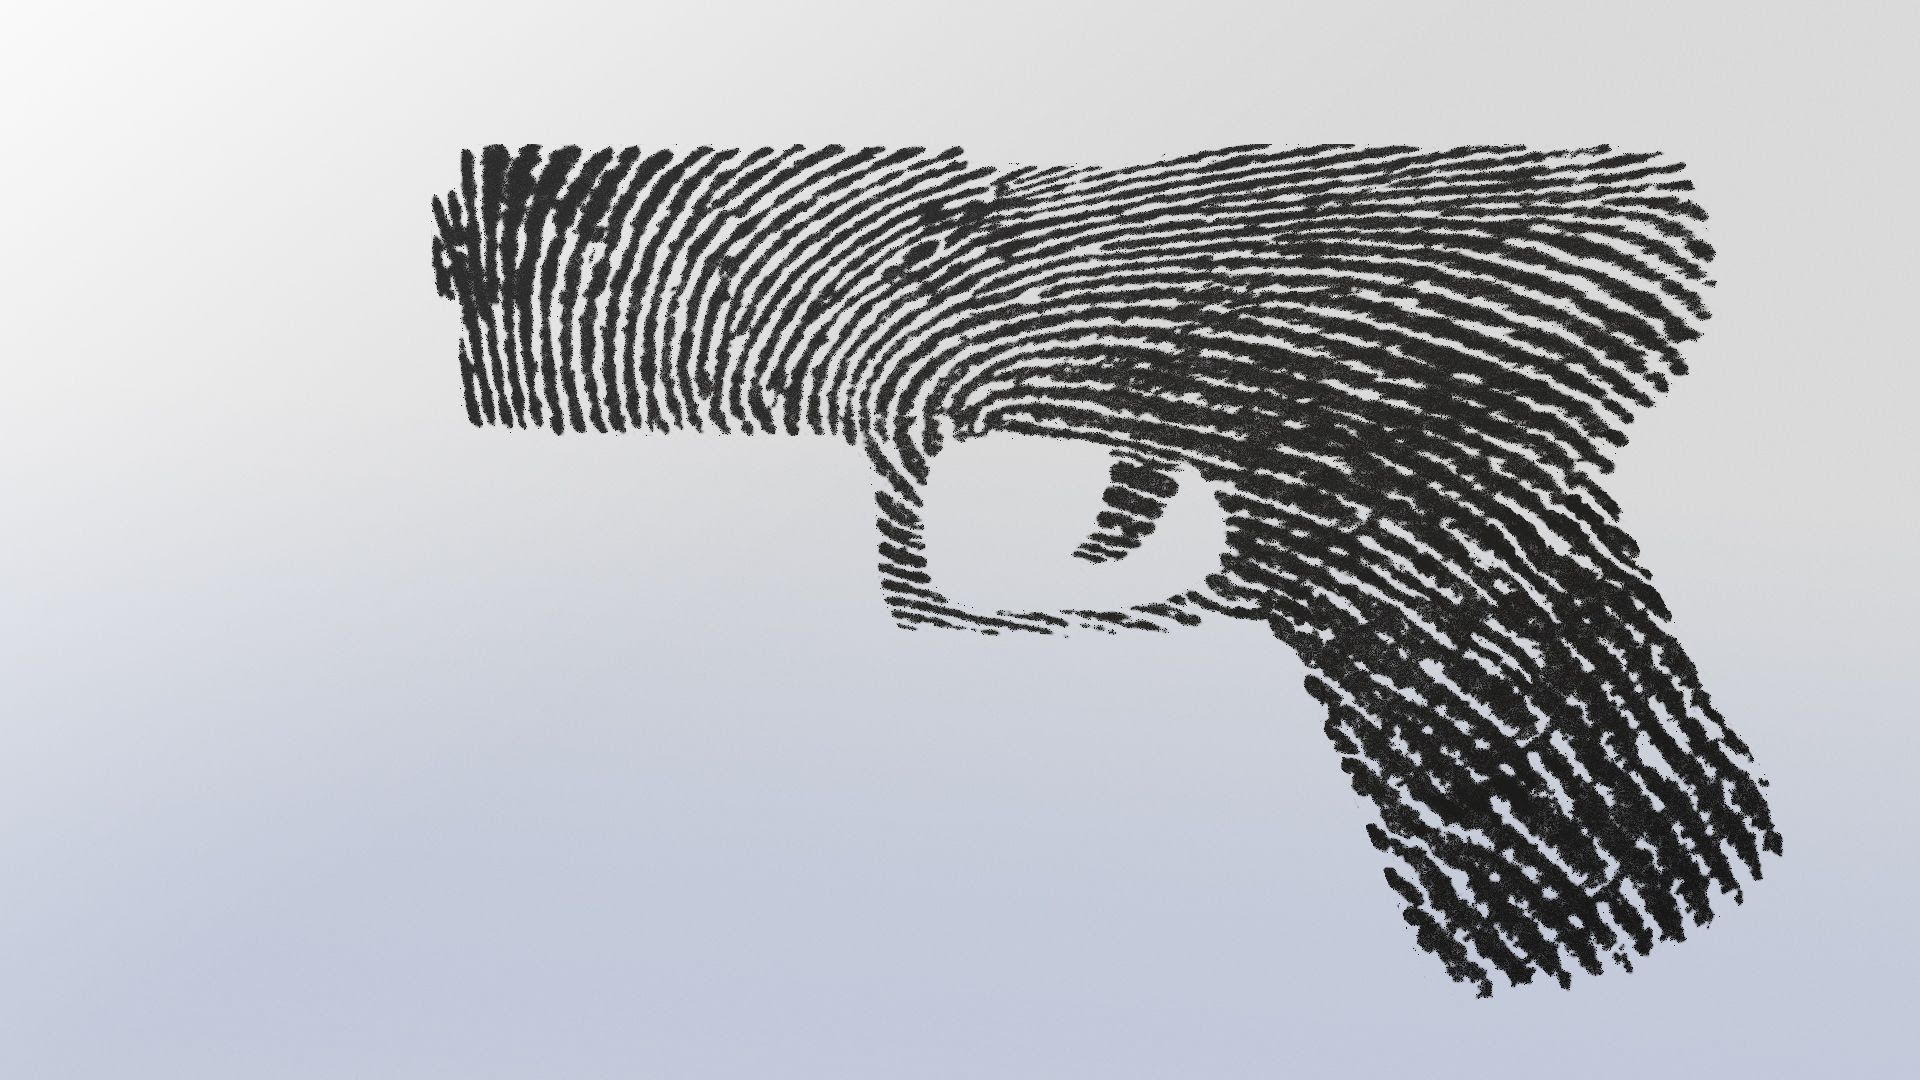 Fingerprint shaped like a handgun